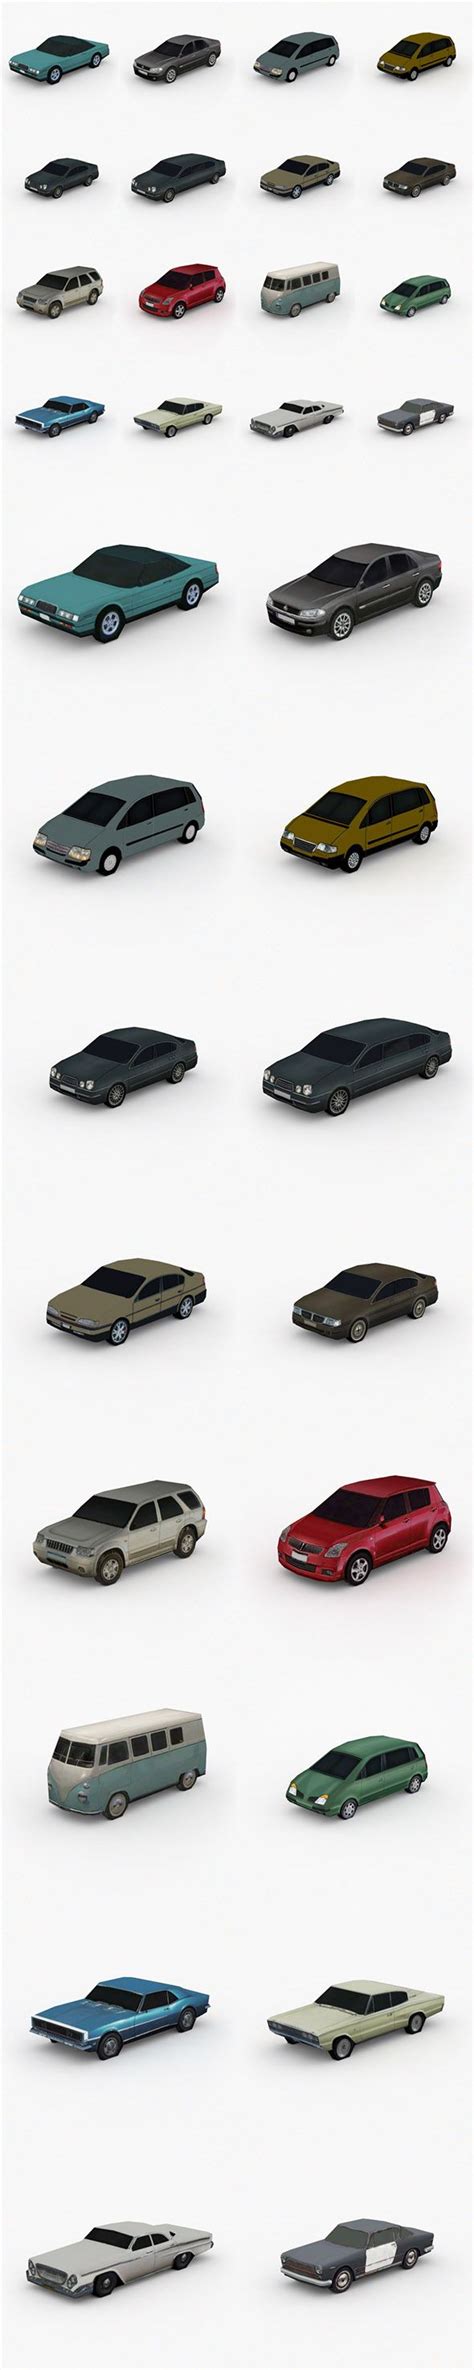 D Model Low Poly Cars Pack Vol